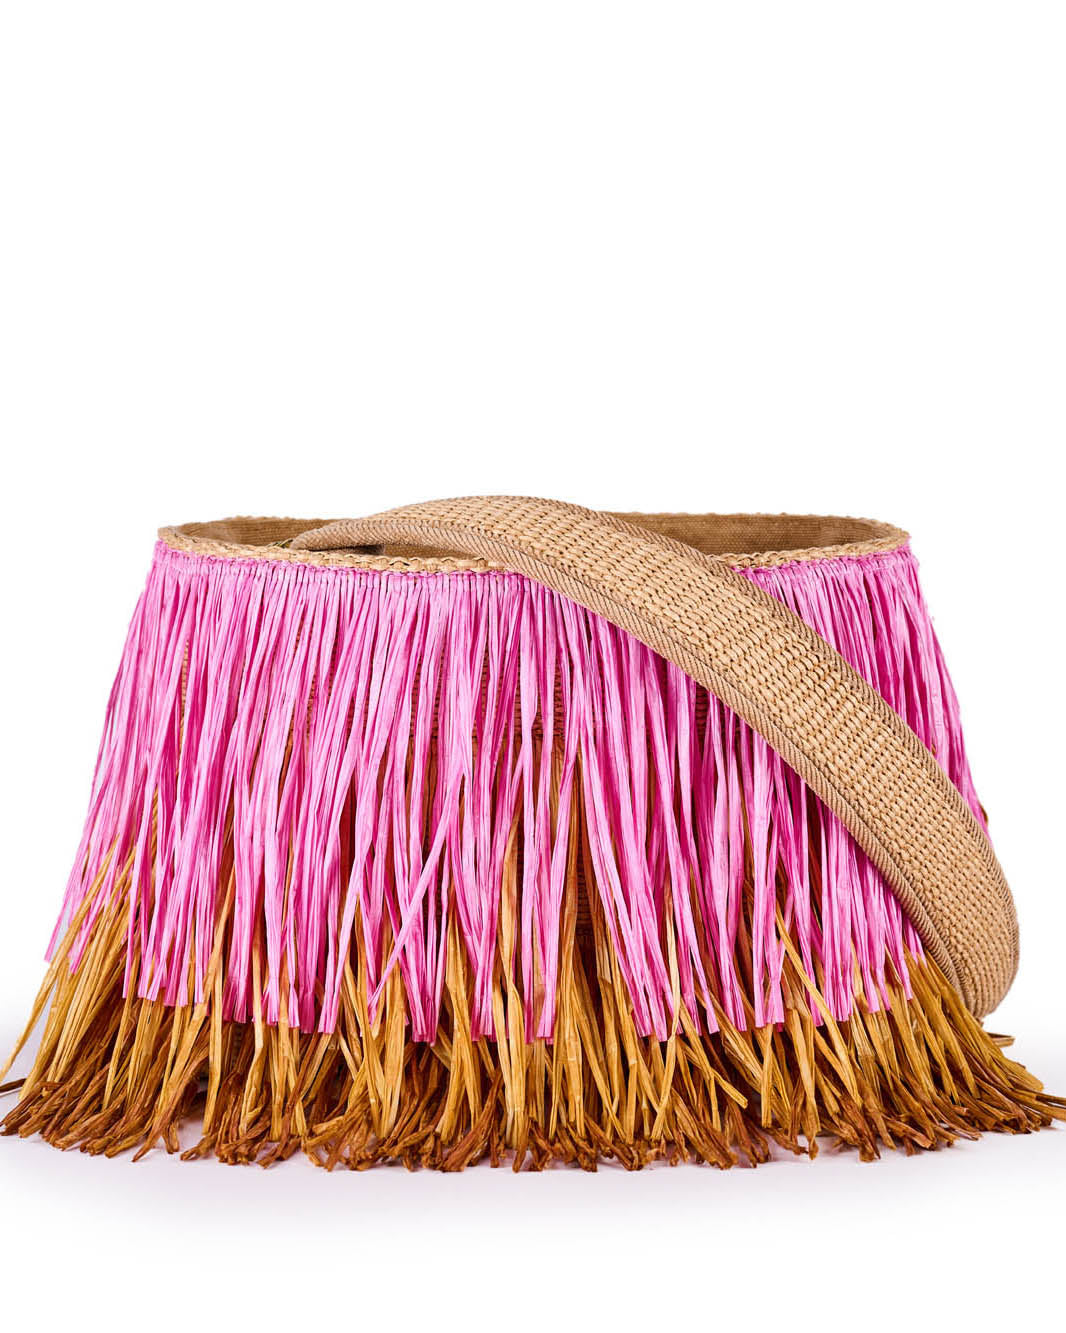 Pink and brown fringed straw handbag with shoulder strap